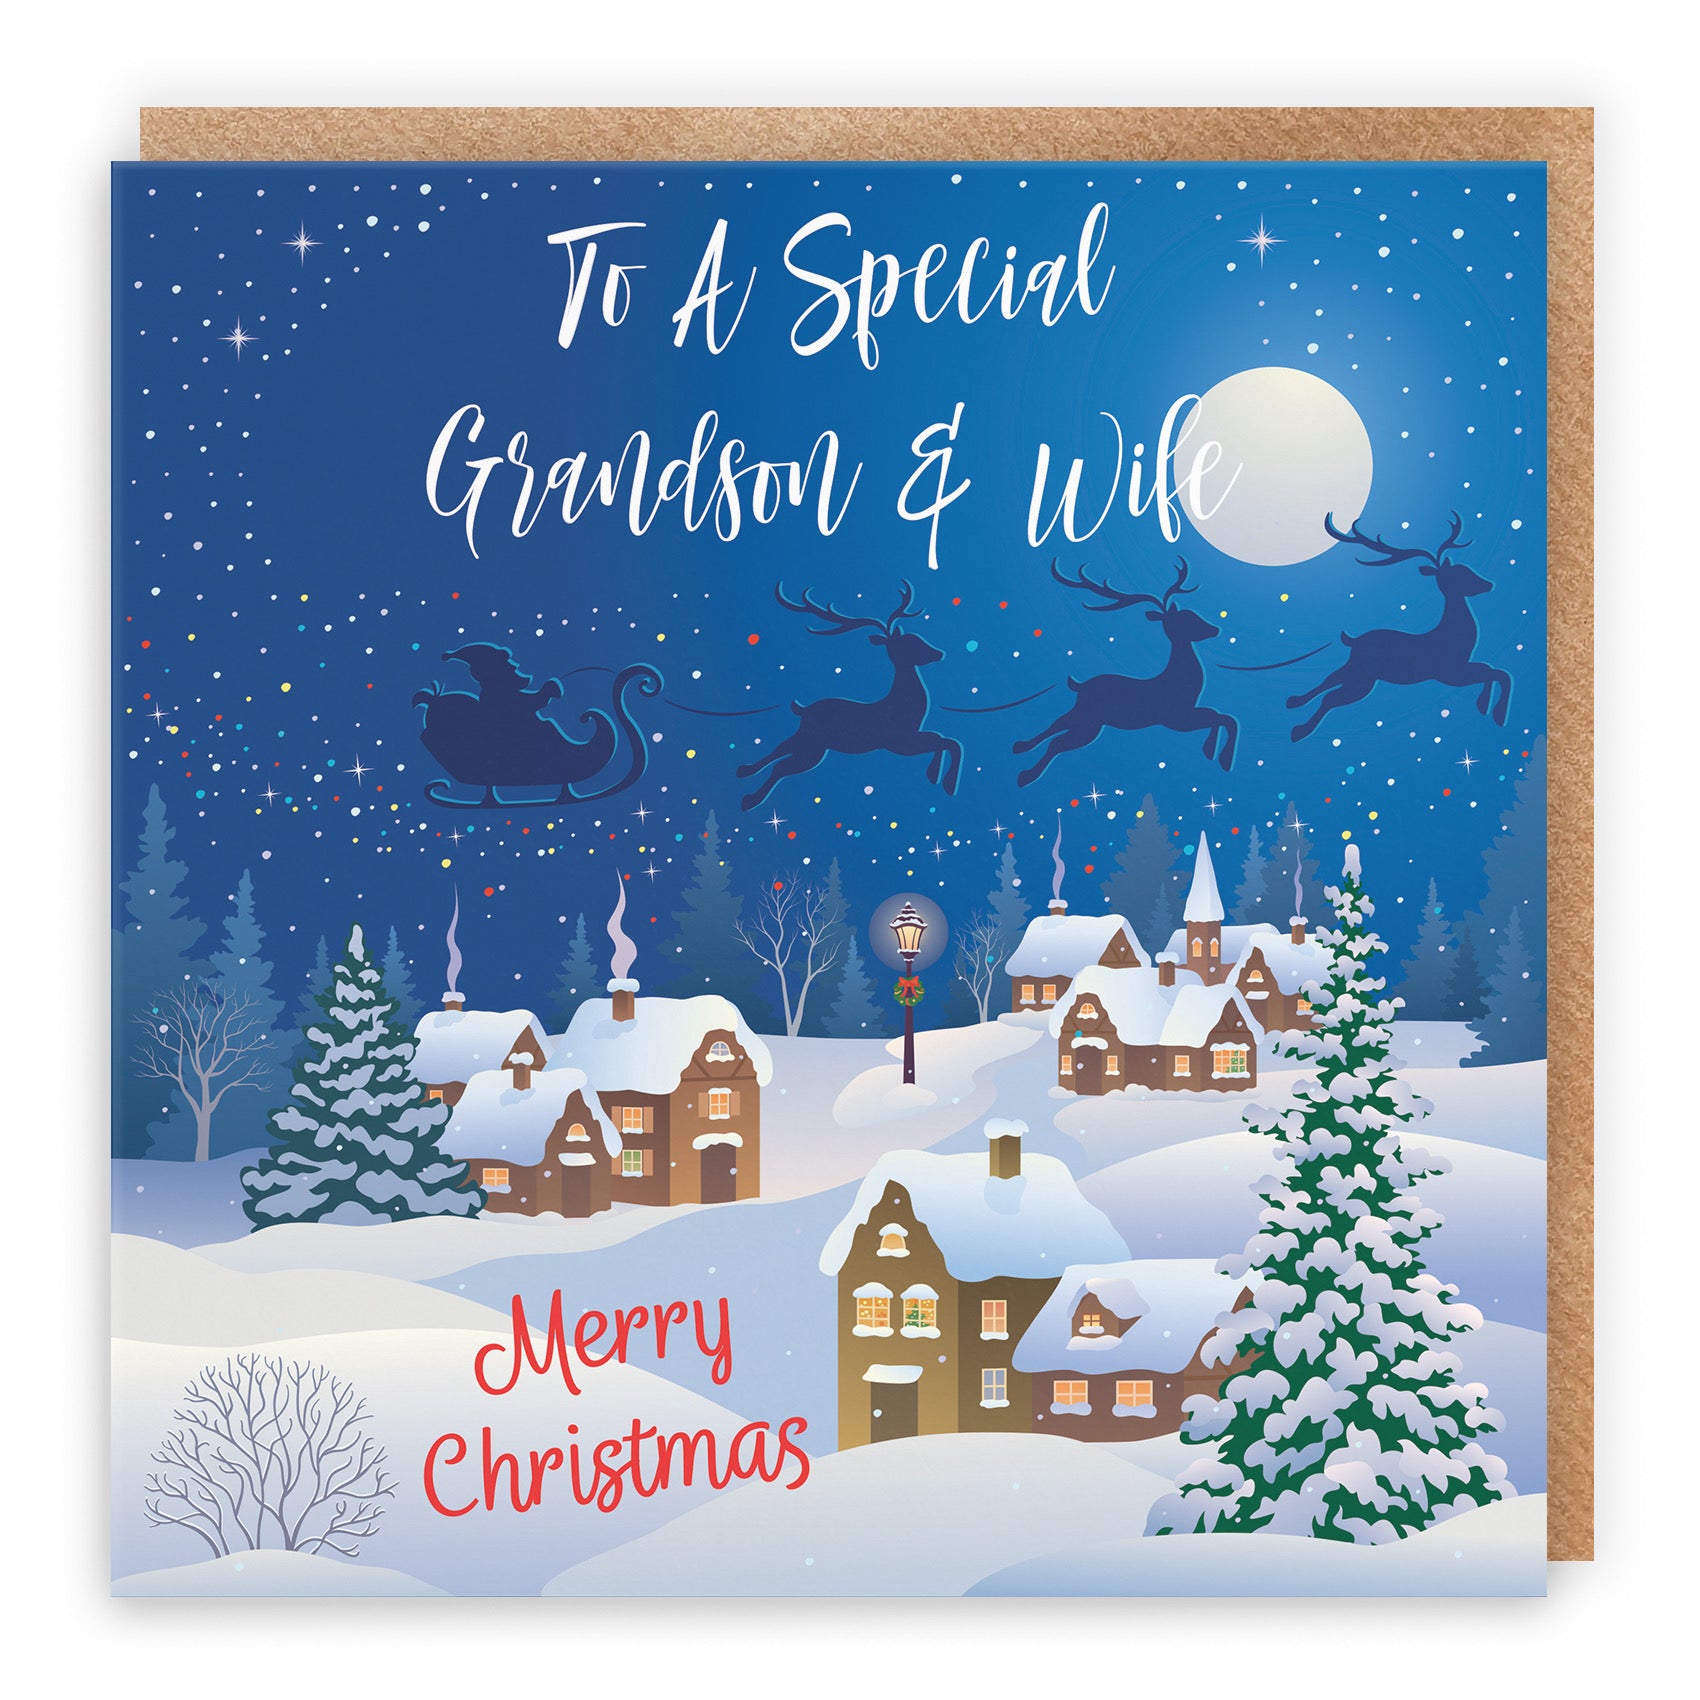 Grandson And Wife Winter Wonderland Christmas Card - Default Title (B09K7VLNWR)